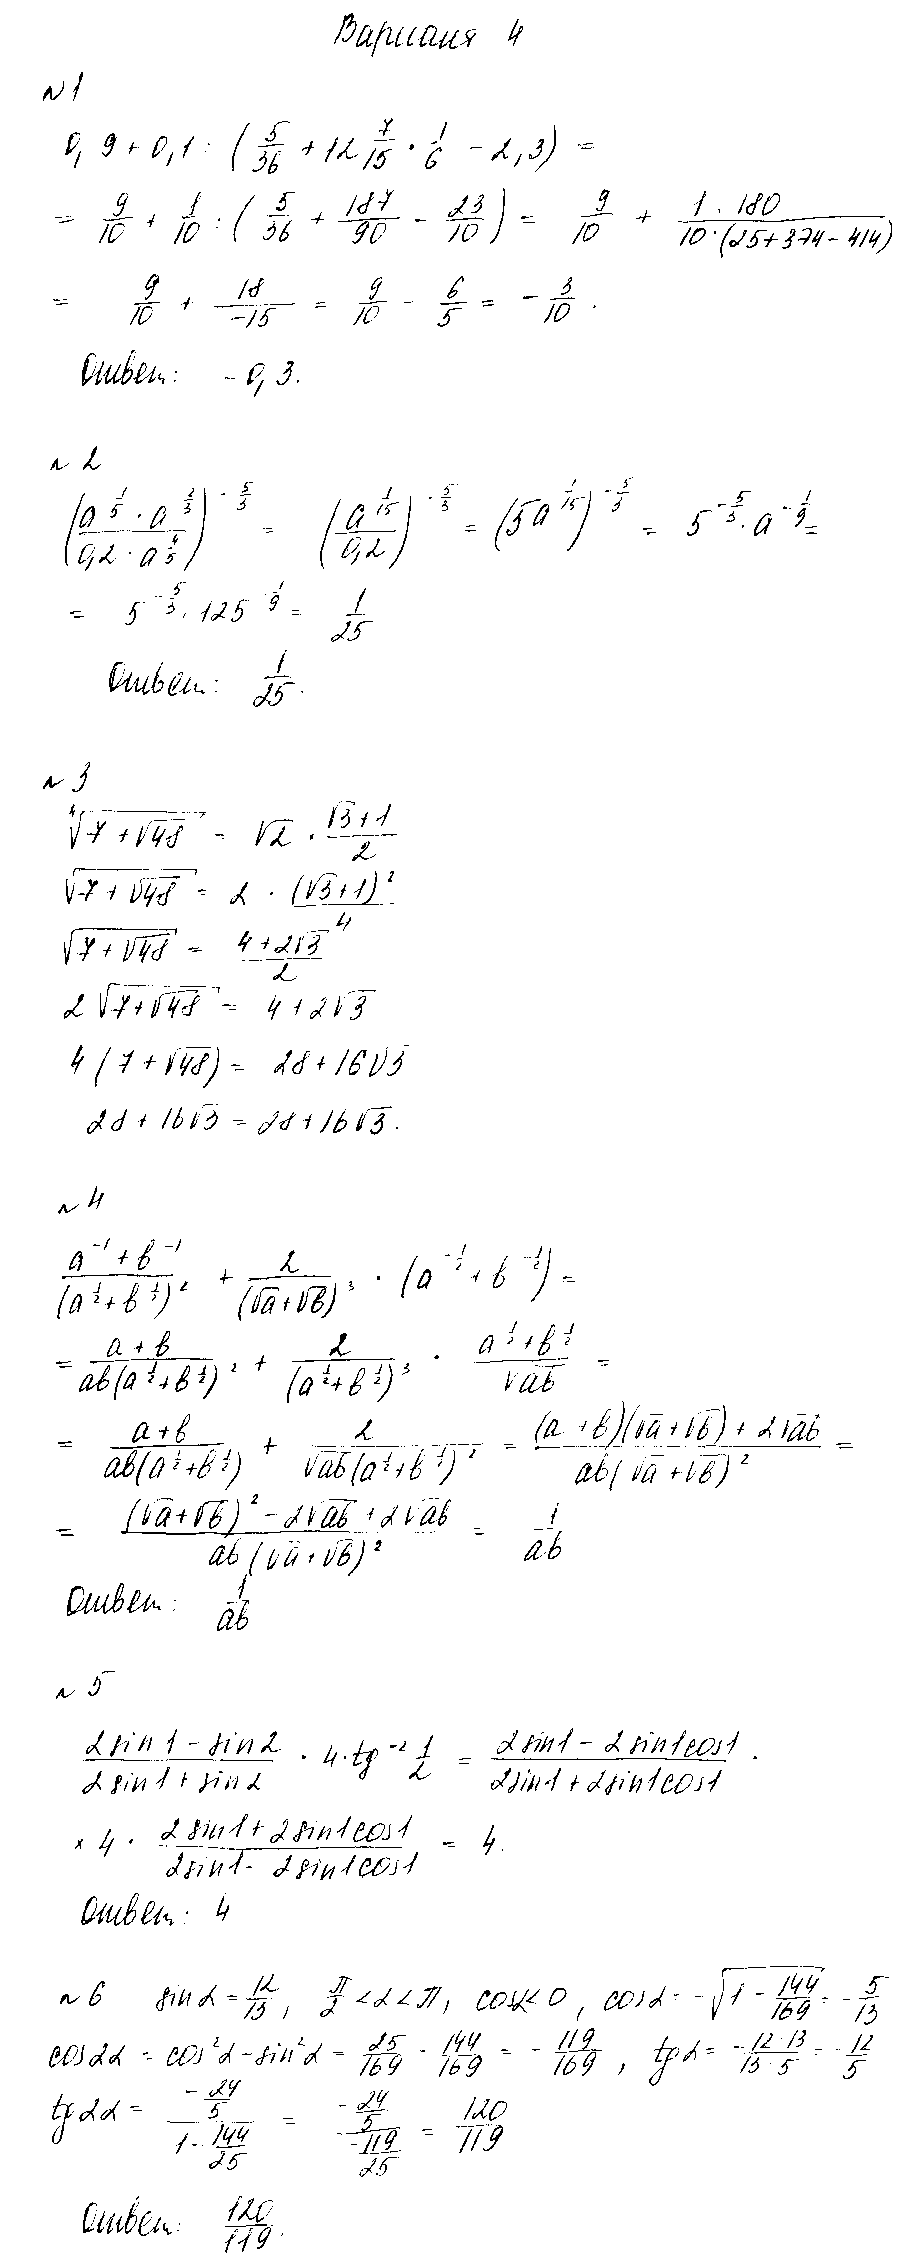 ГДЗ Алгебра 9 класс - Вариант 4